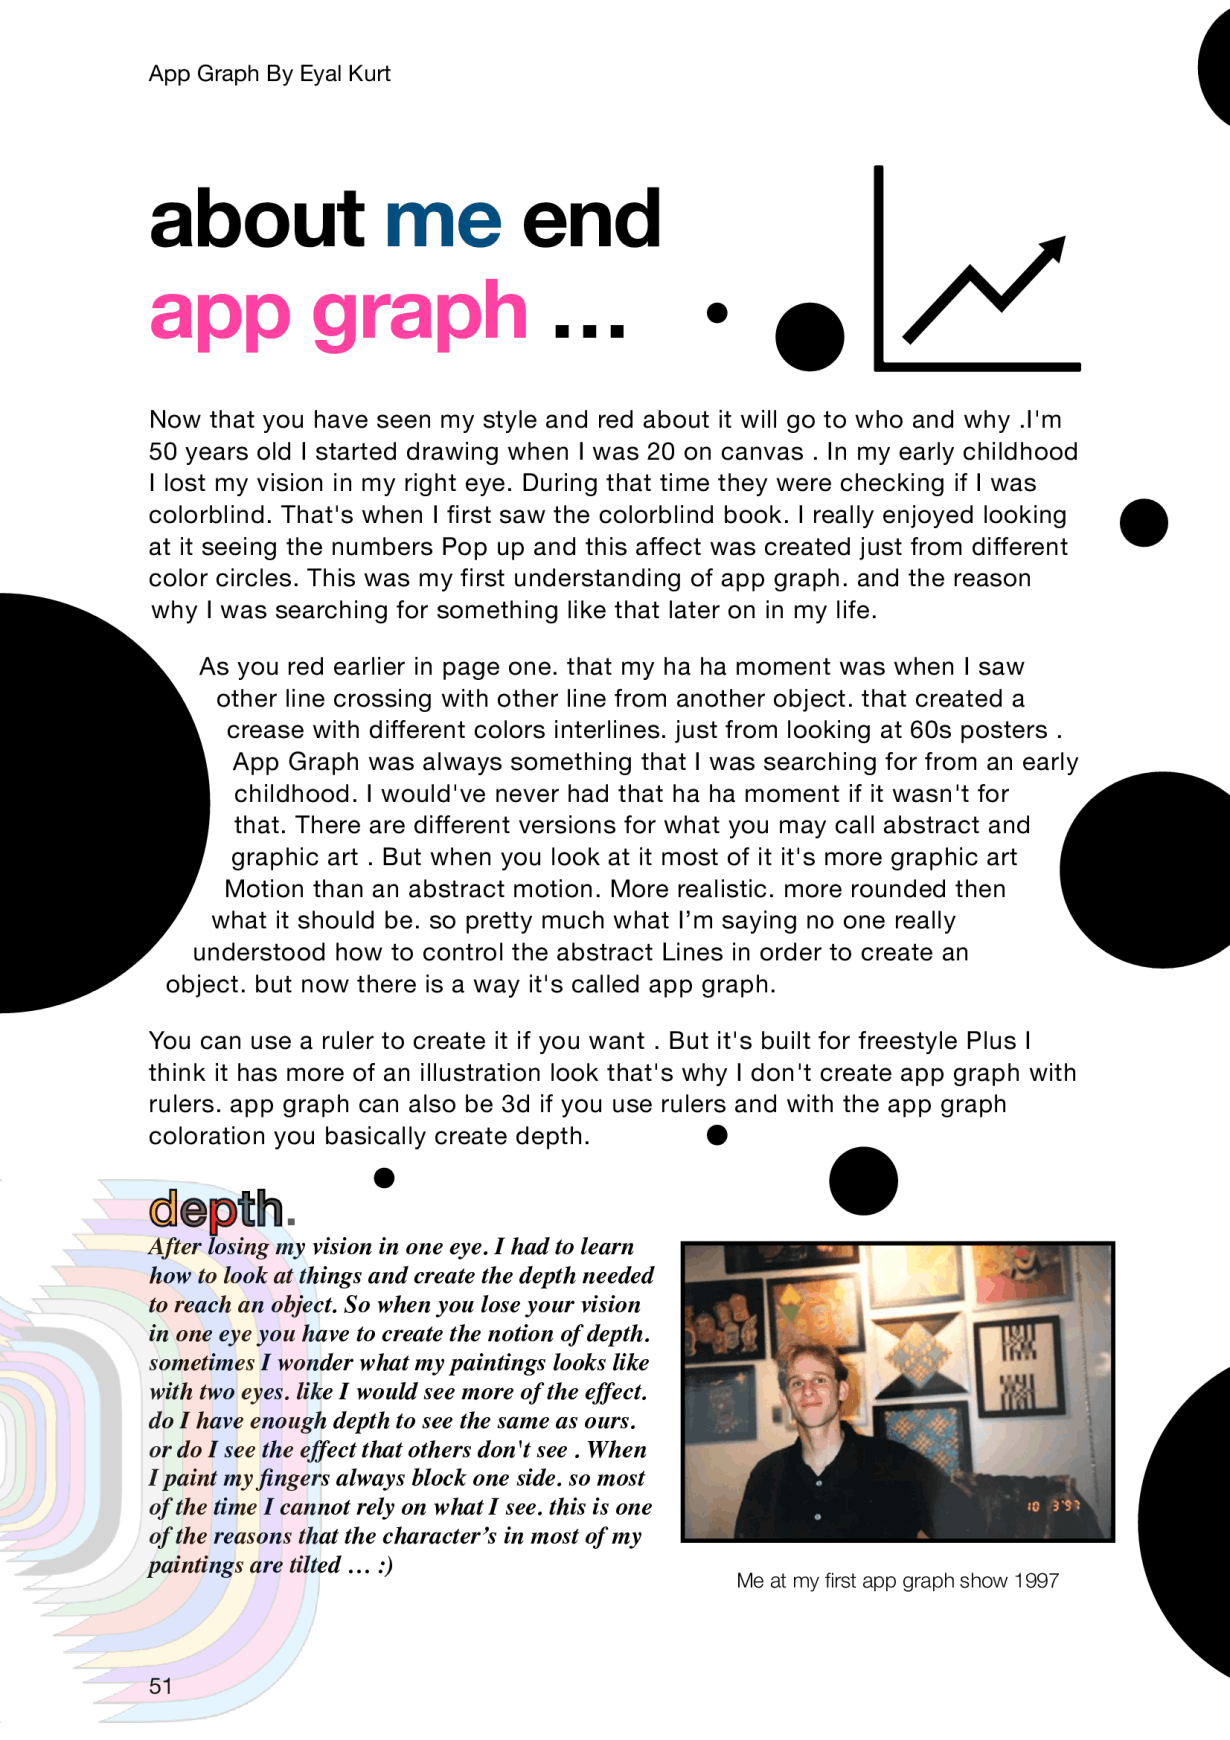 App Graph page 51